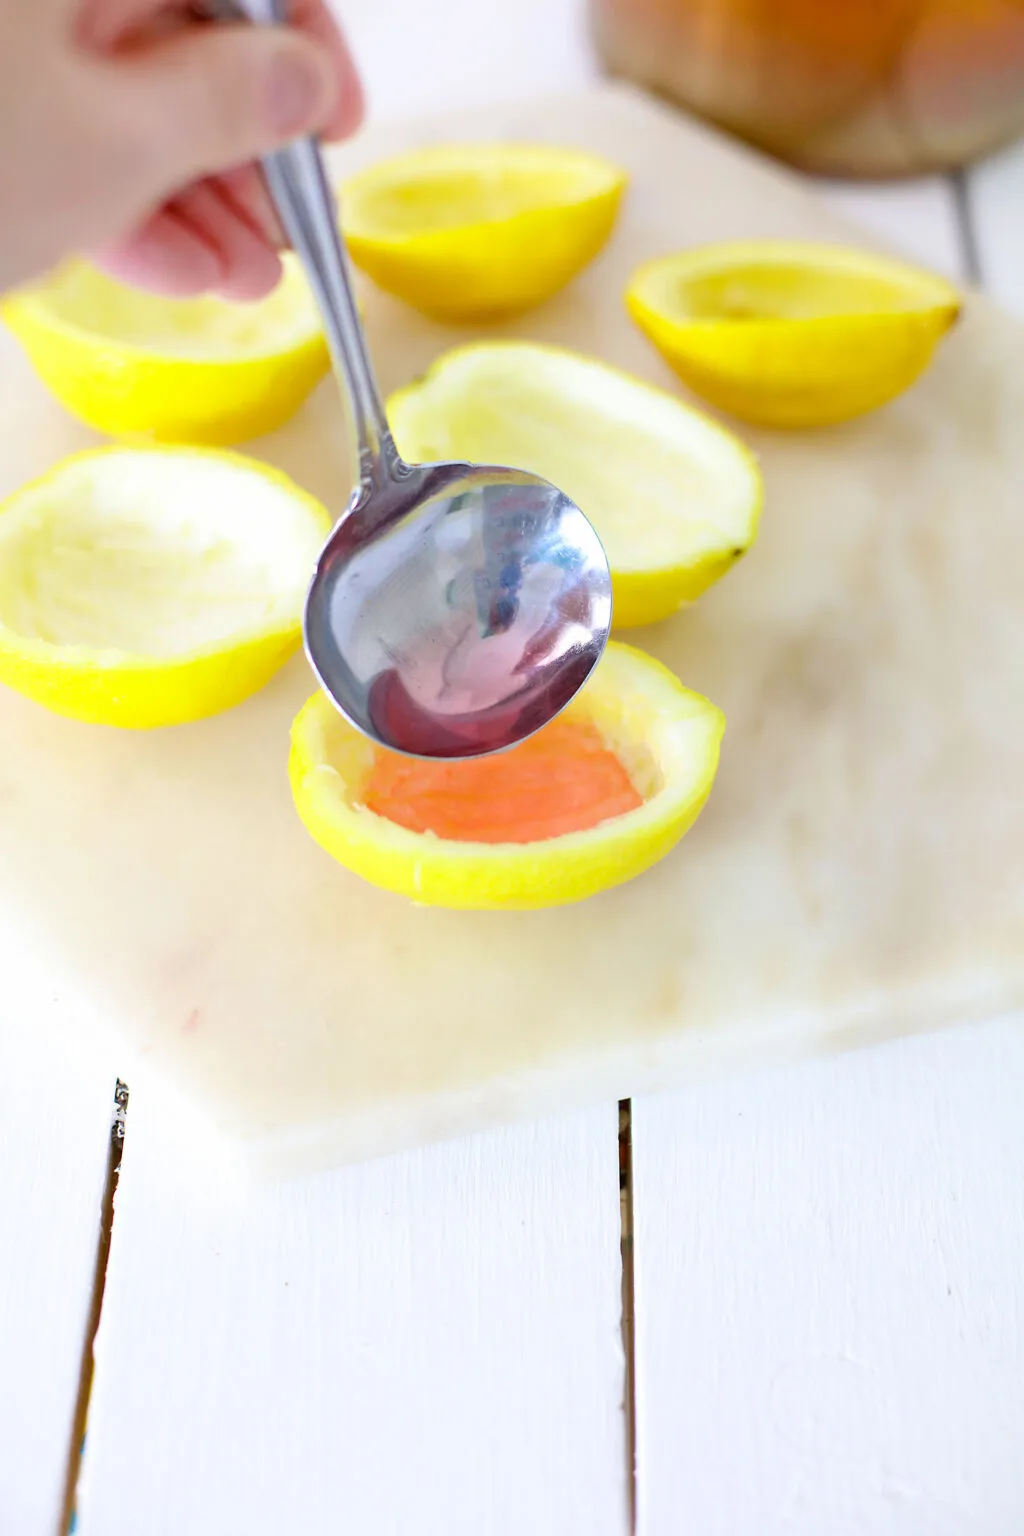 filling lemon rinds with pink lemonade mixture